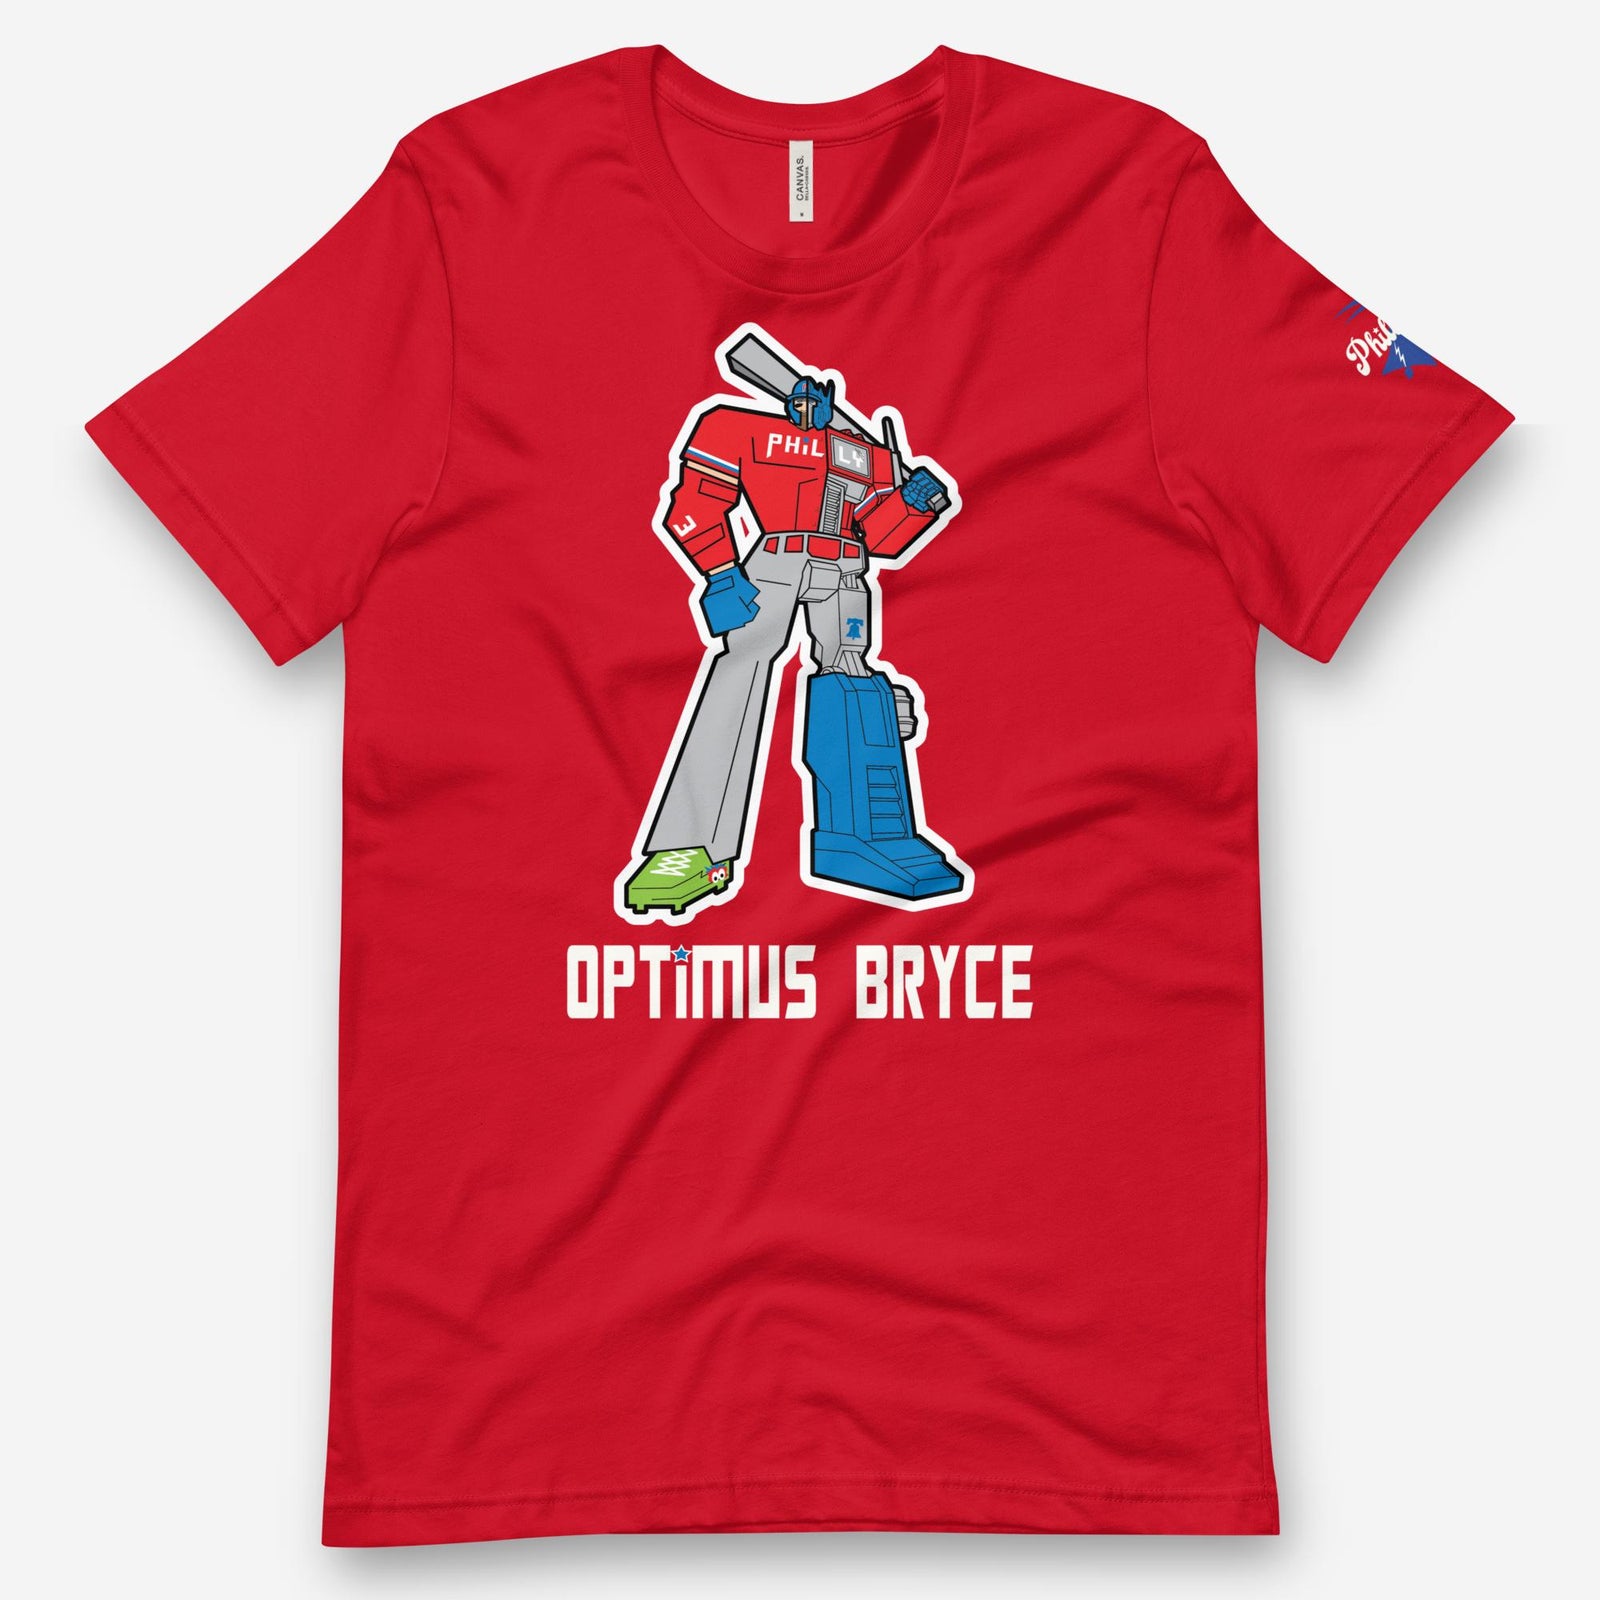 "Optimus Bryce" Tee